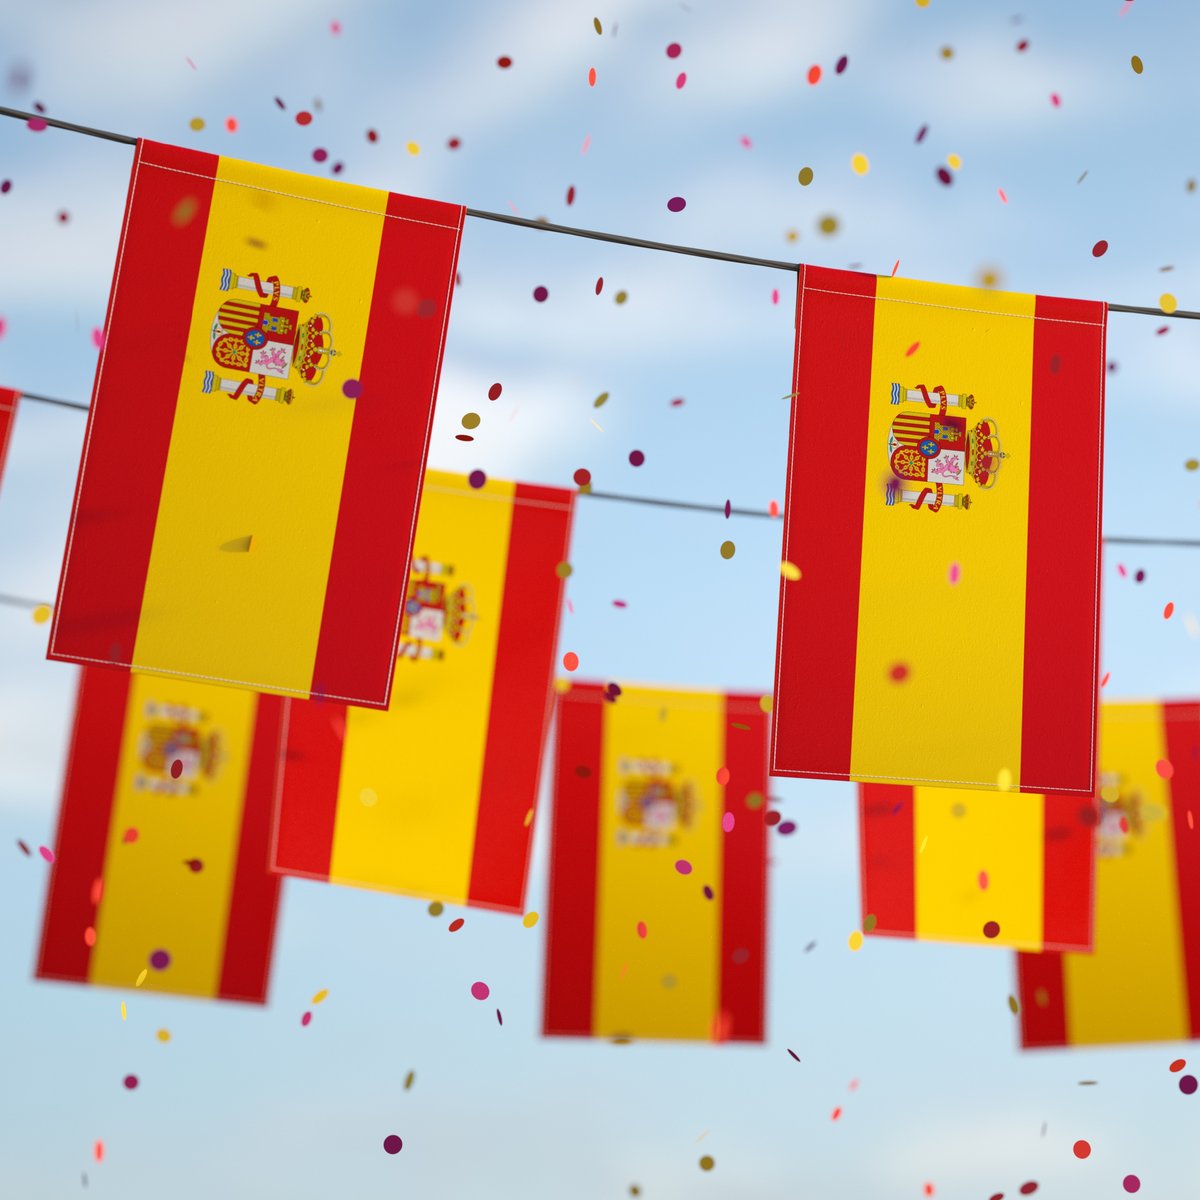 ¡Viva España! Celebrating the rich culture, history, and unity of Spain on this National Day.

#corpamman #hmhhotelgroup #amman #NationalDayofSpain #VivaEspaña